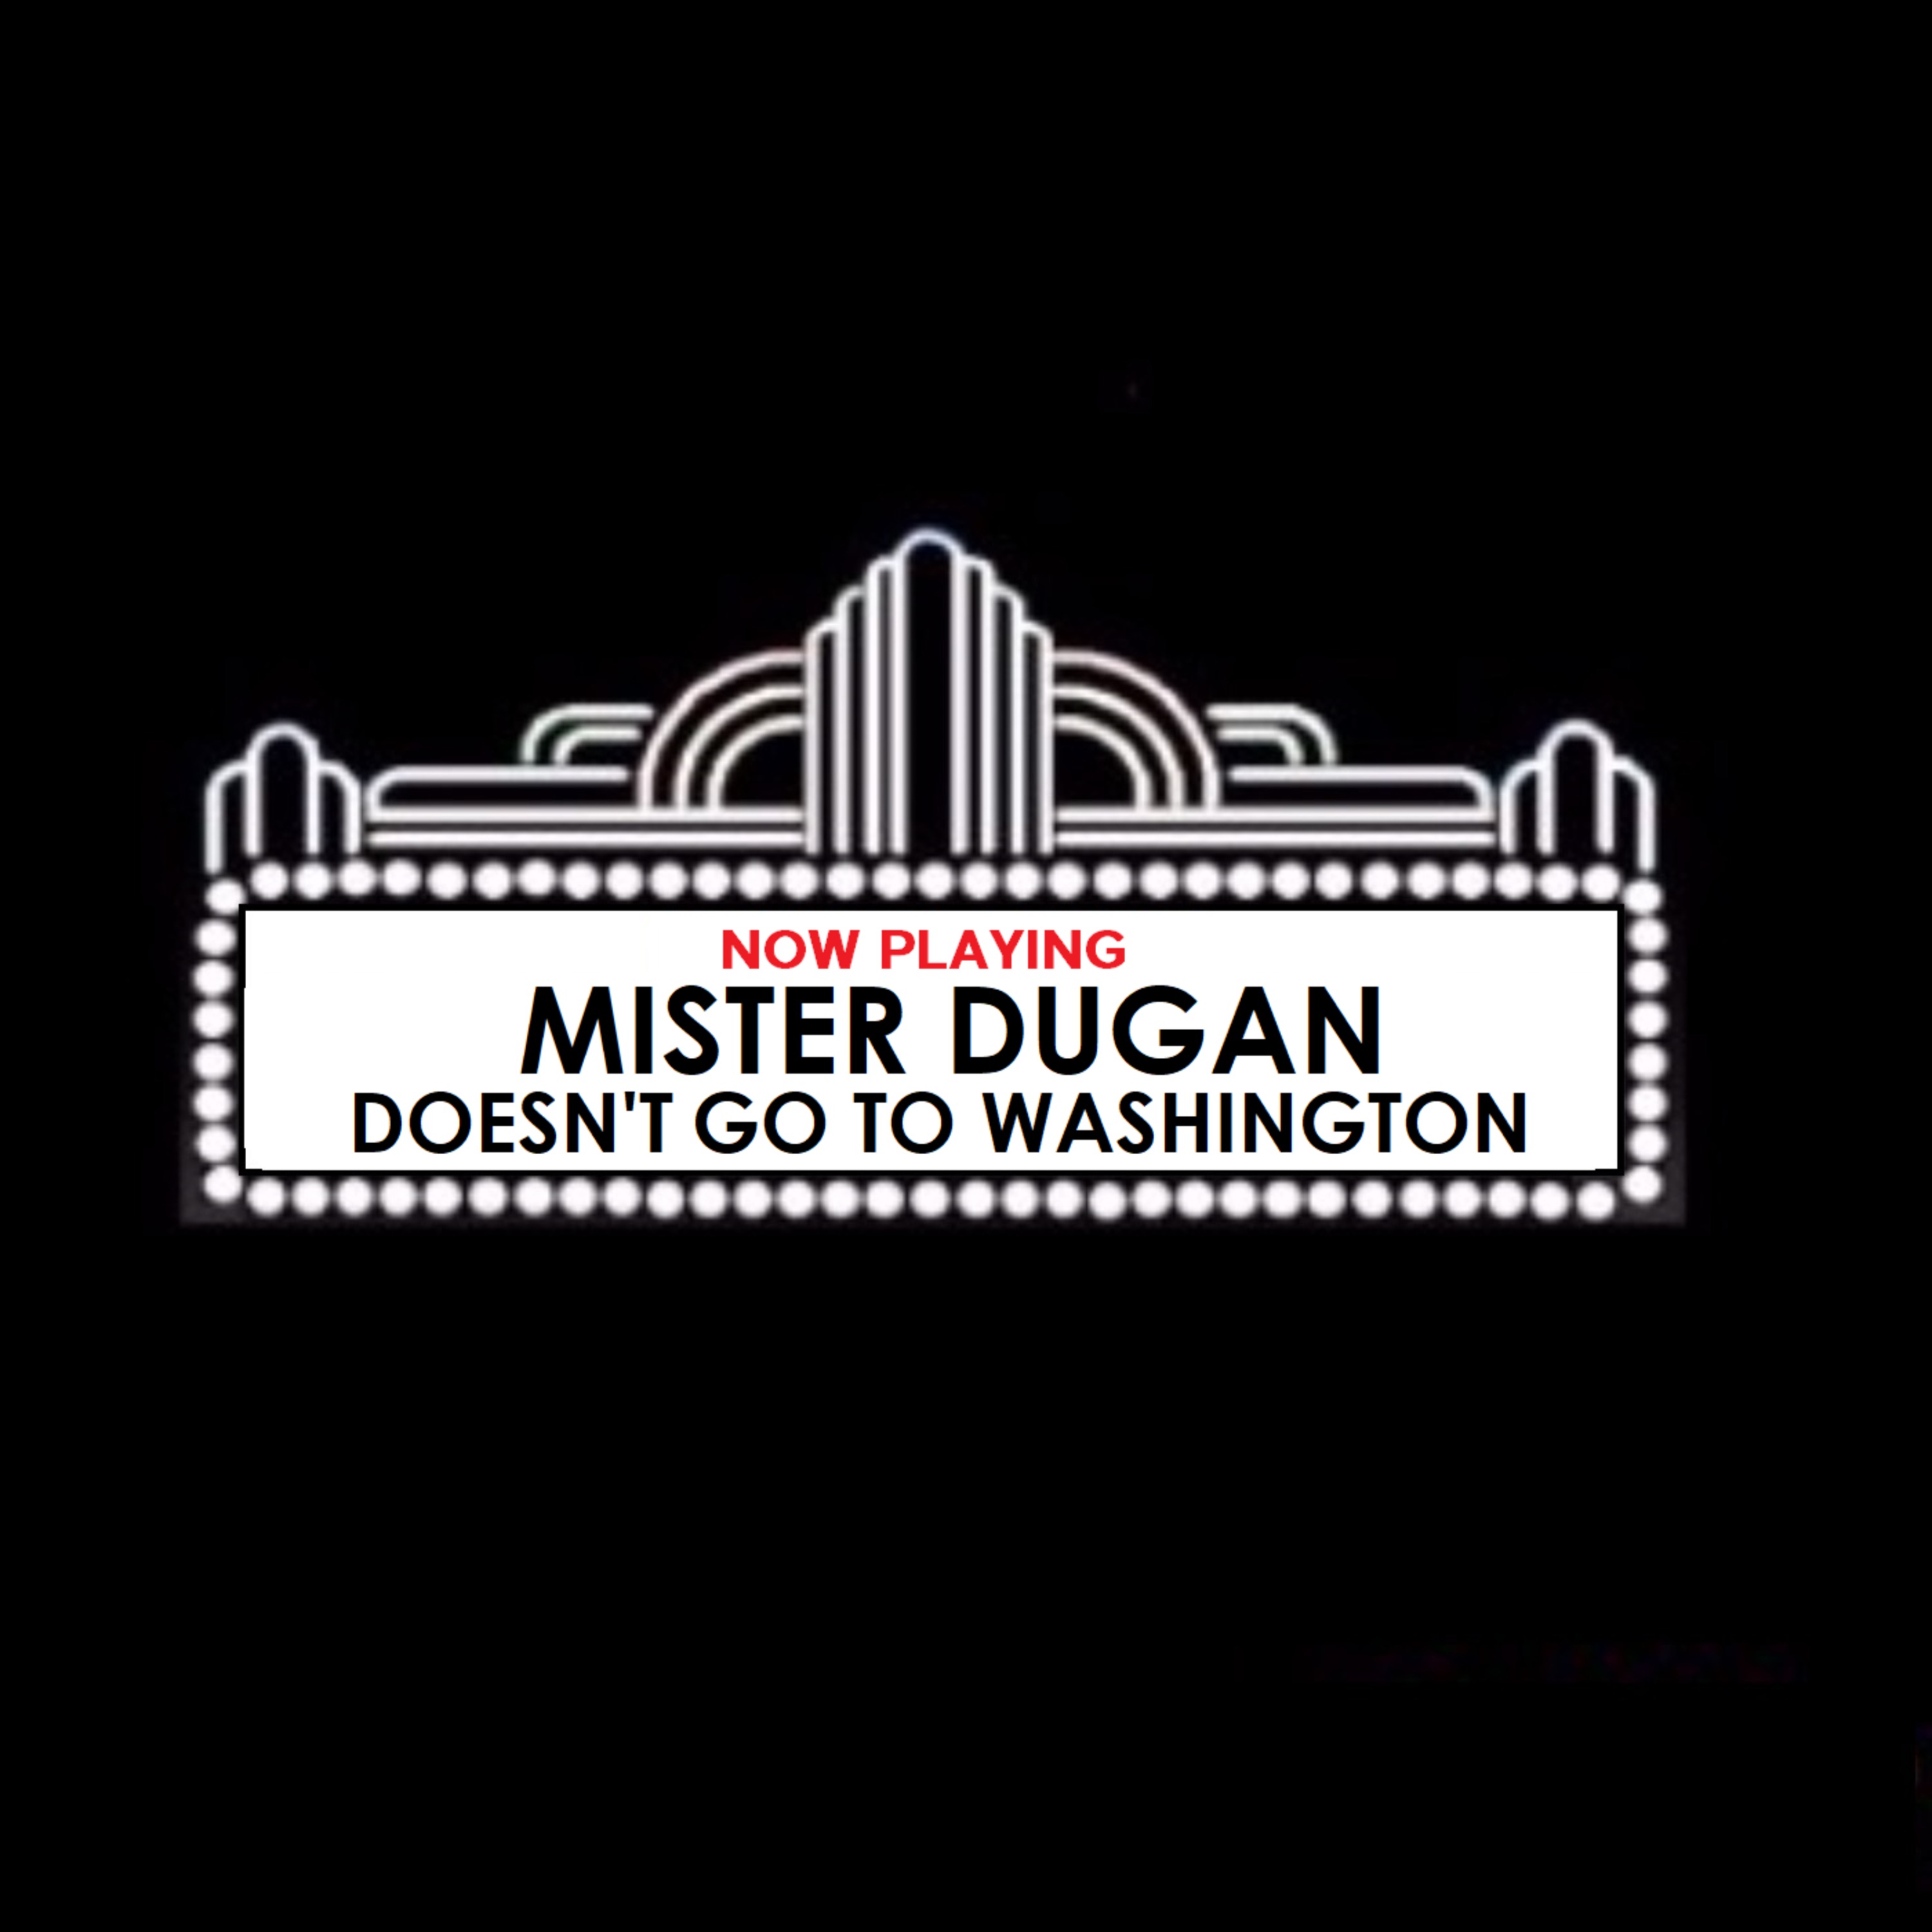 Mr. Dugan Doesn’t Go To Washington